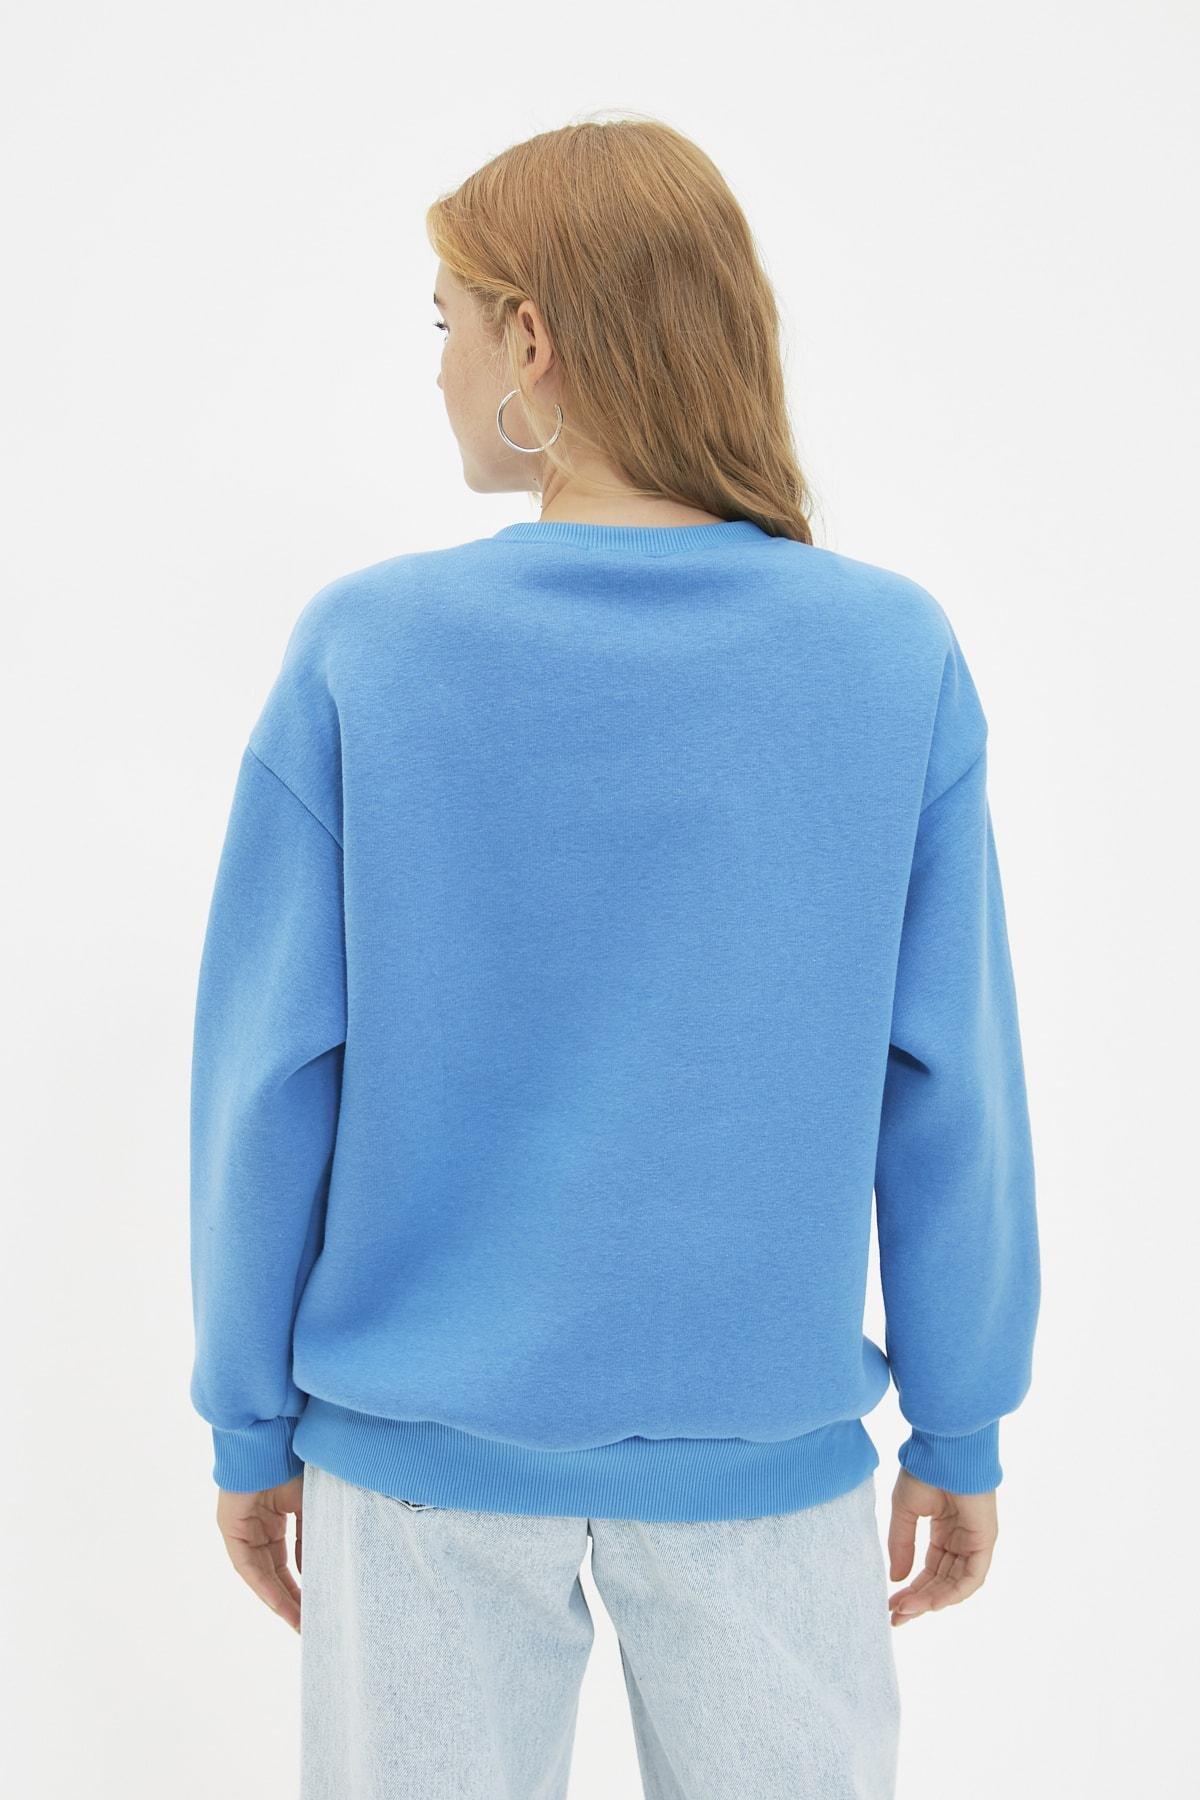 Trendyol - Blue Printed Crew Neck Sweatshirt